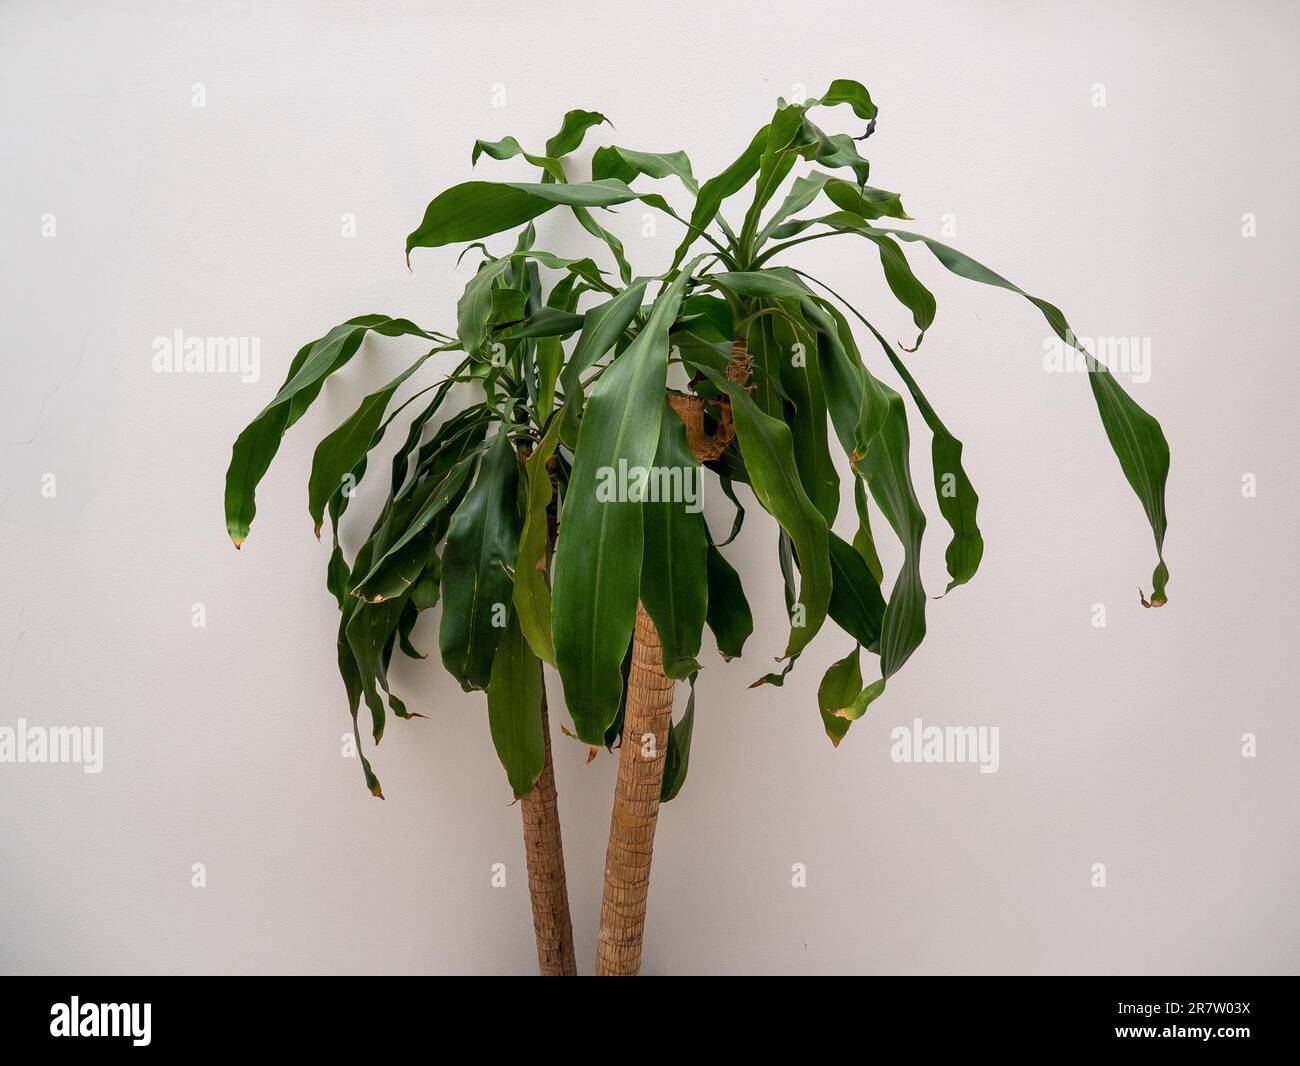 Interior Plant Known as Cornstalk Dracaena (Dracaena fragrans) against a White Wall Stock Photo